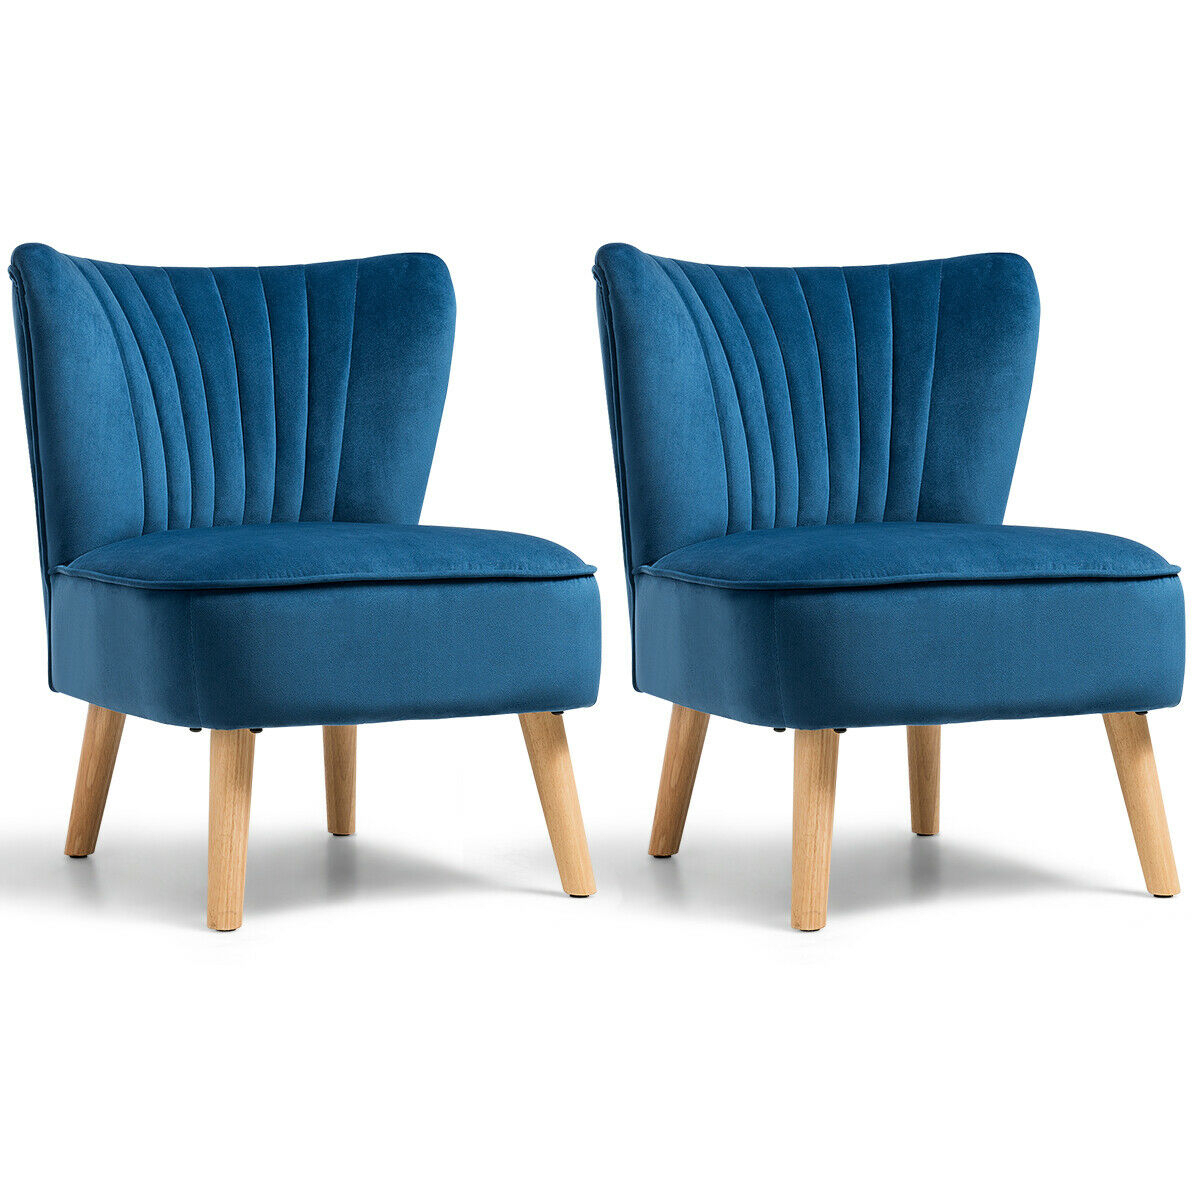 2PCS Accent Chair Armless Leisure Chair Single Sofa W/ Wood Legs Green/Blue/Pink - Blue